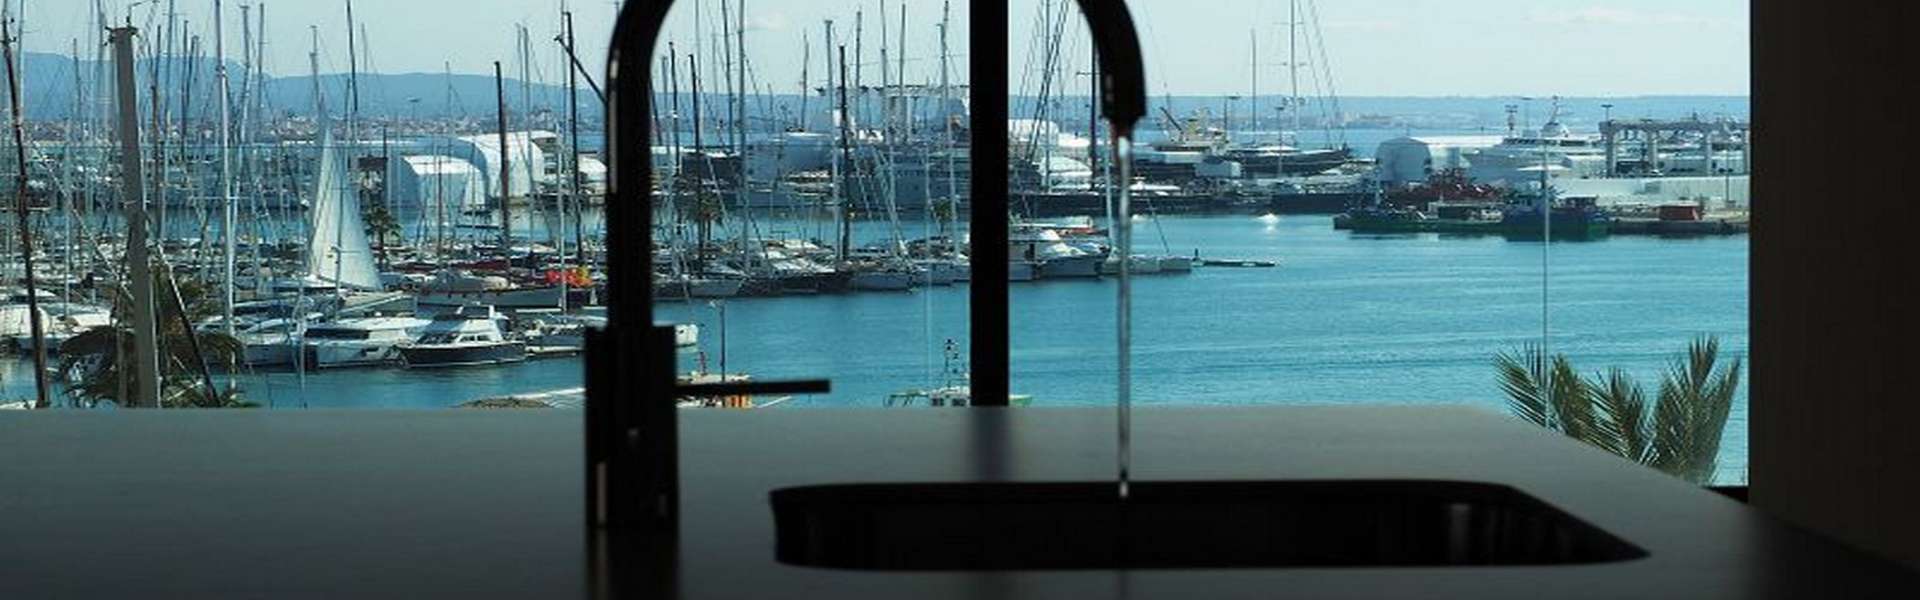 Palma/Paseo Marítimo - Luxury apartment on the port promenade 